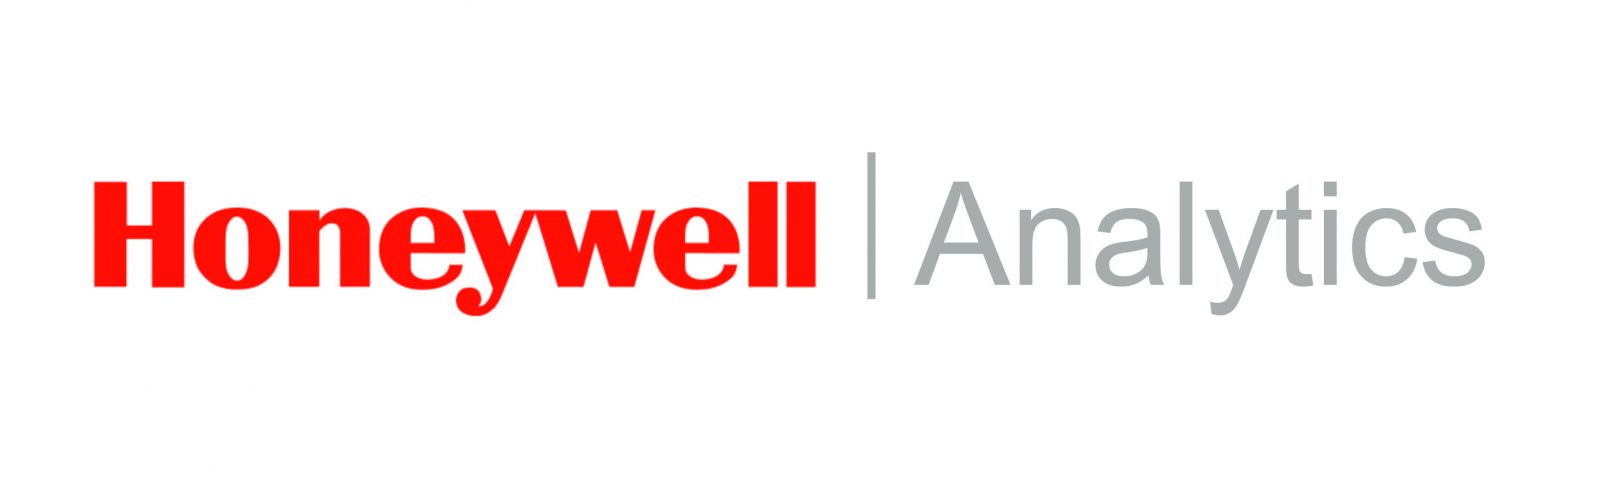 Honeywell-Analytics-Web Style-01